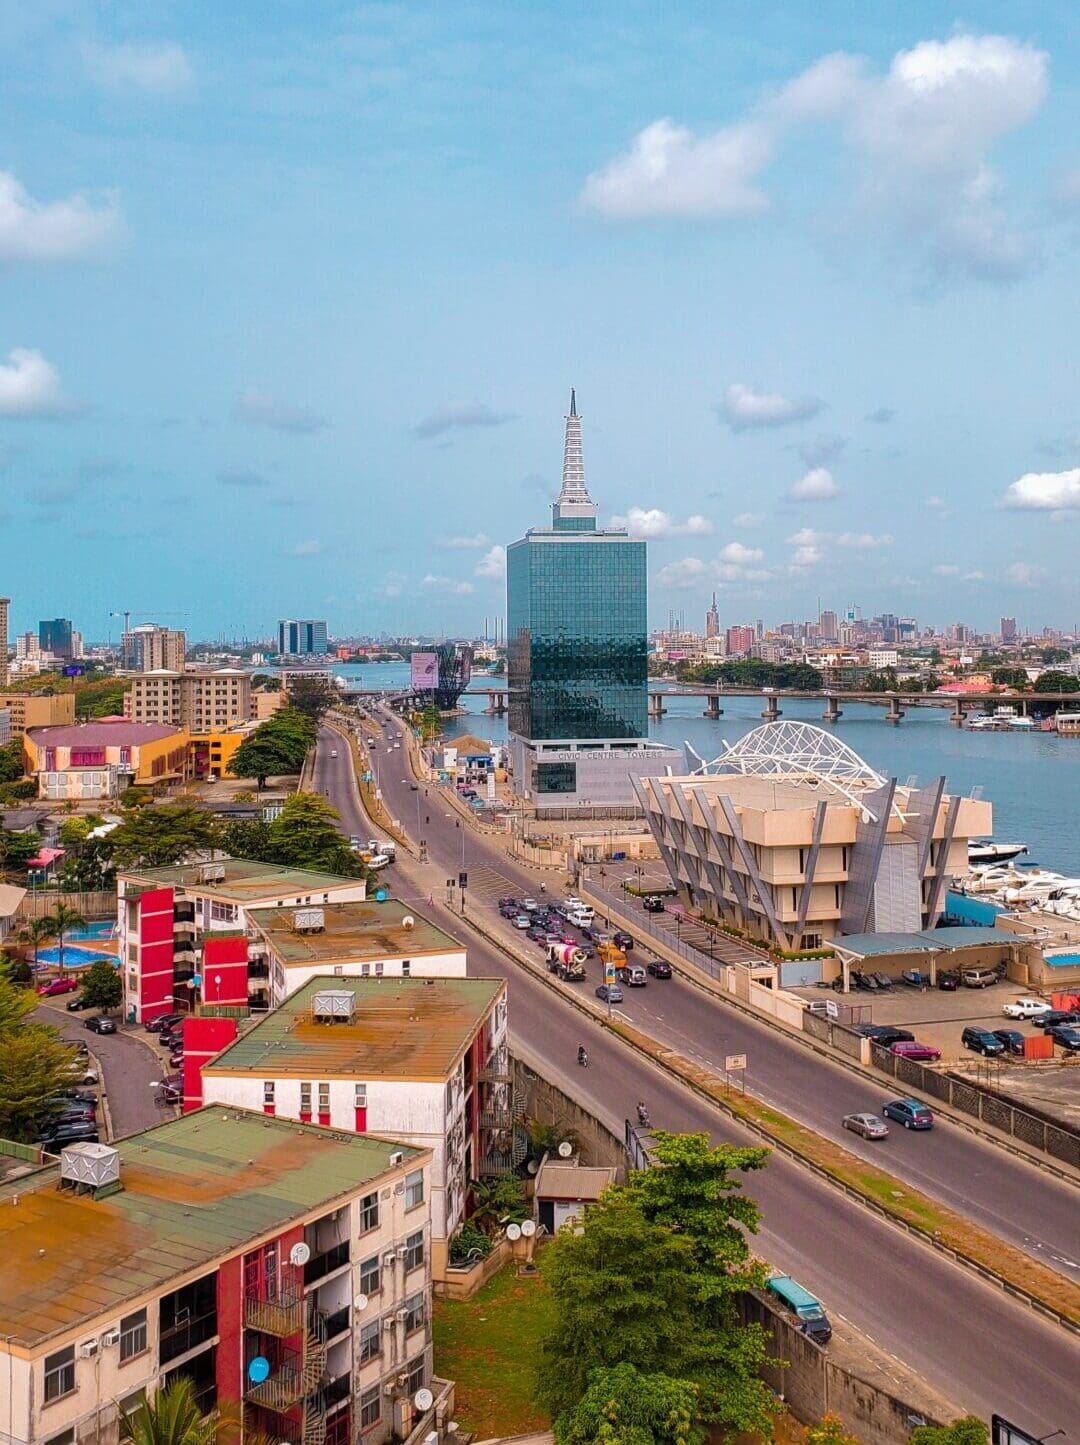 Nigerian author Damilare Kuku on how to make the most of Lagos | View of Lagos, Nigeria